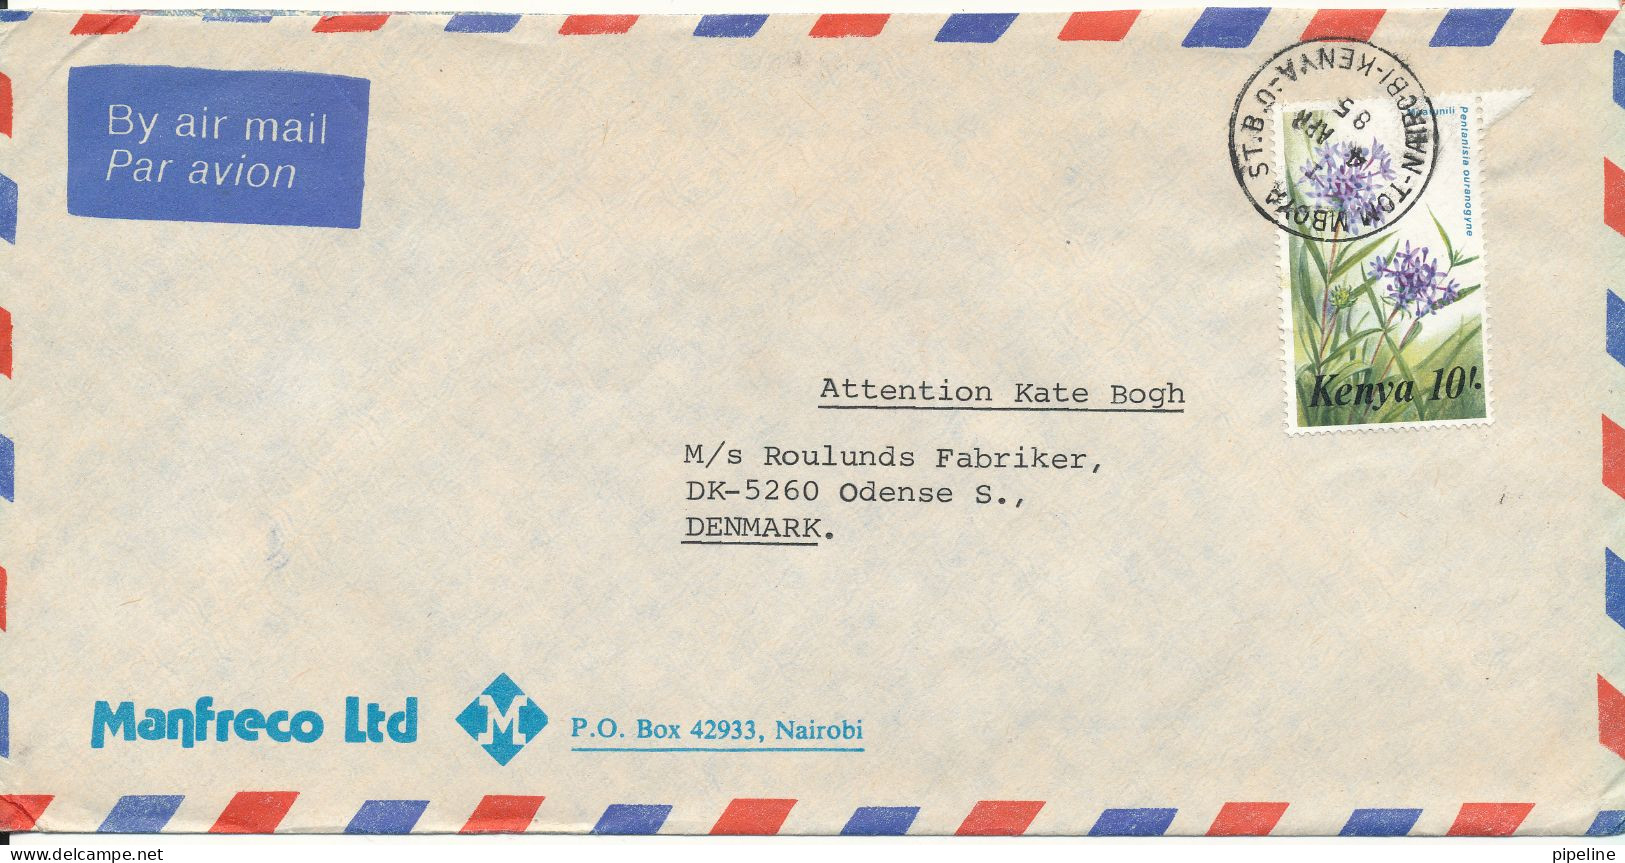 Kenya Air Mail Cover Sent To Denmark 4-4-1985 Single Franked - Kenya (1963-...)